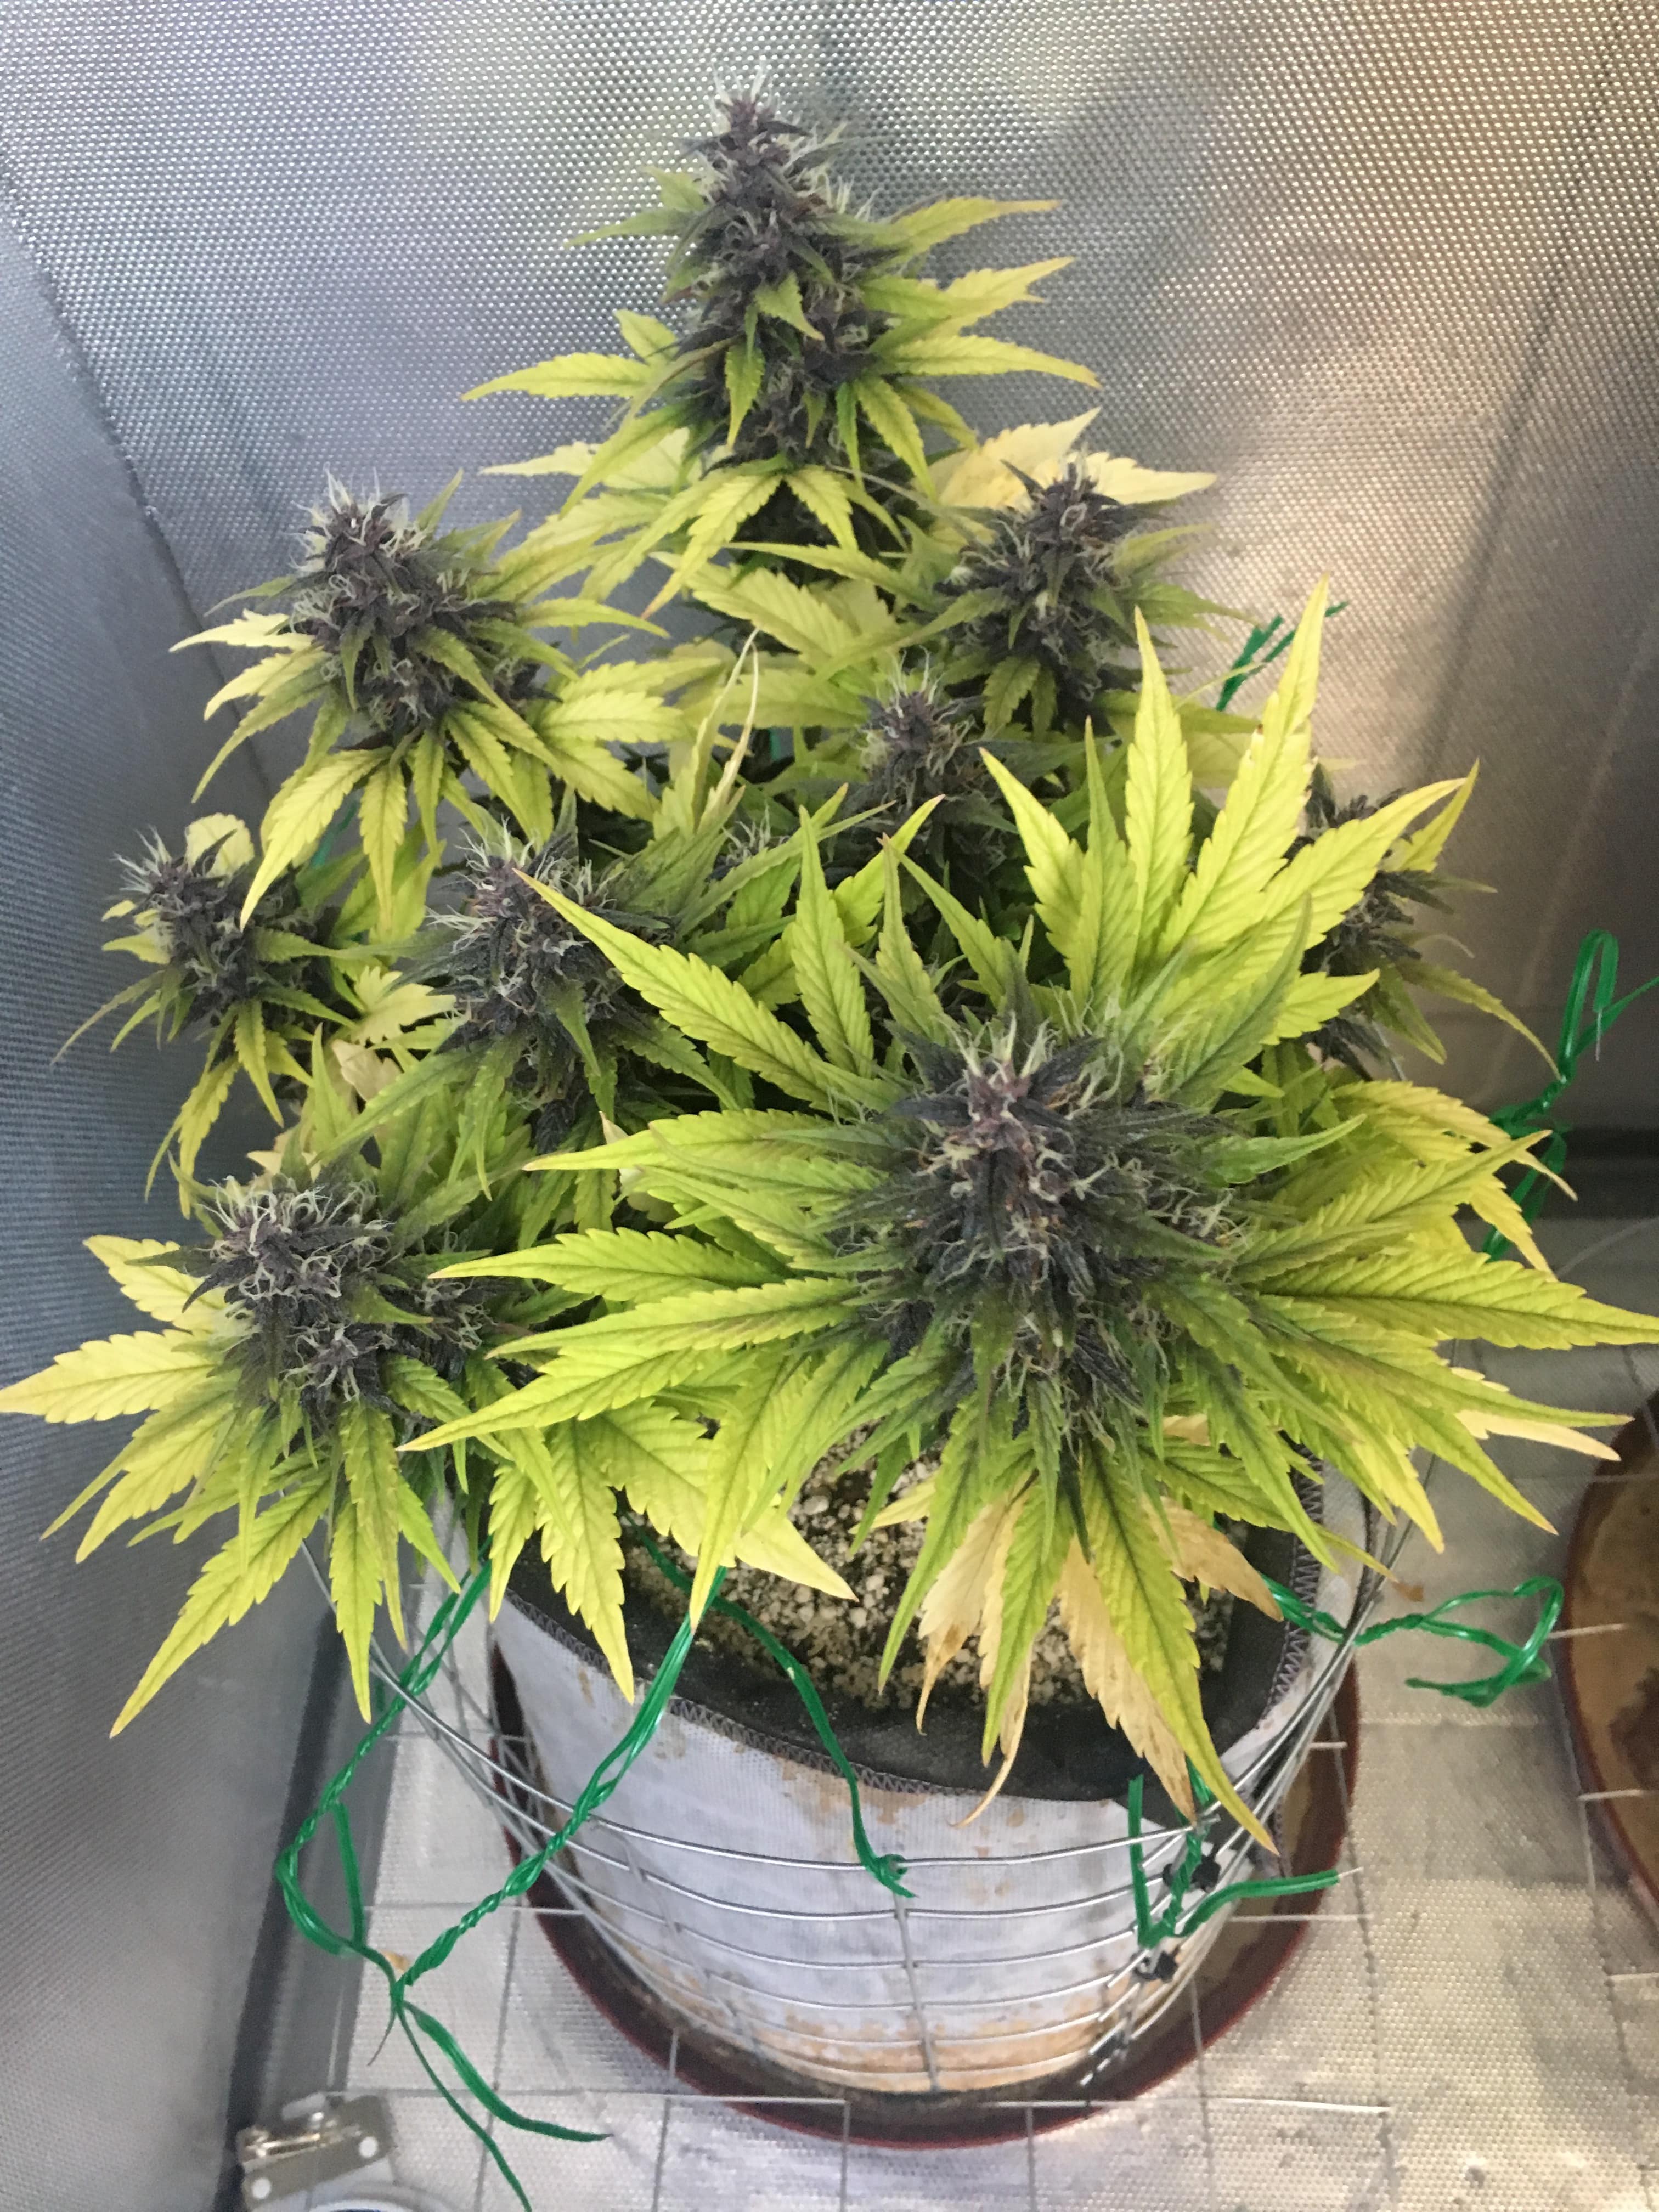 Purple. 47 days of growth